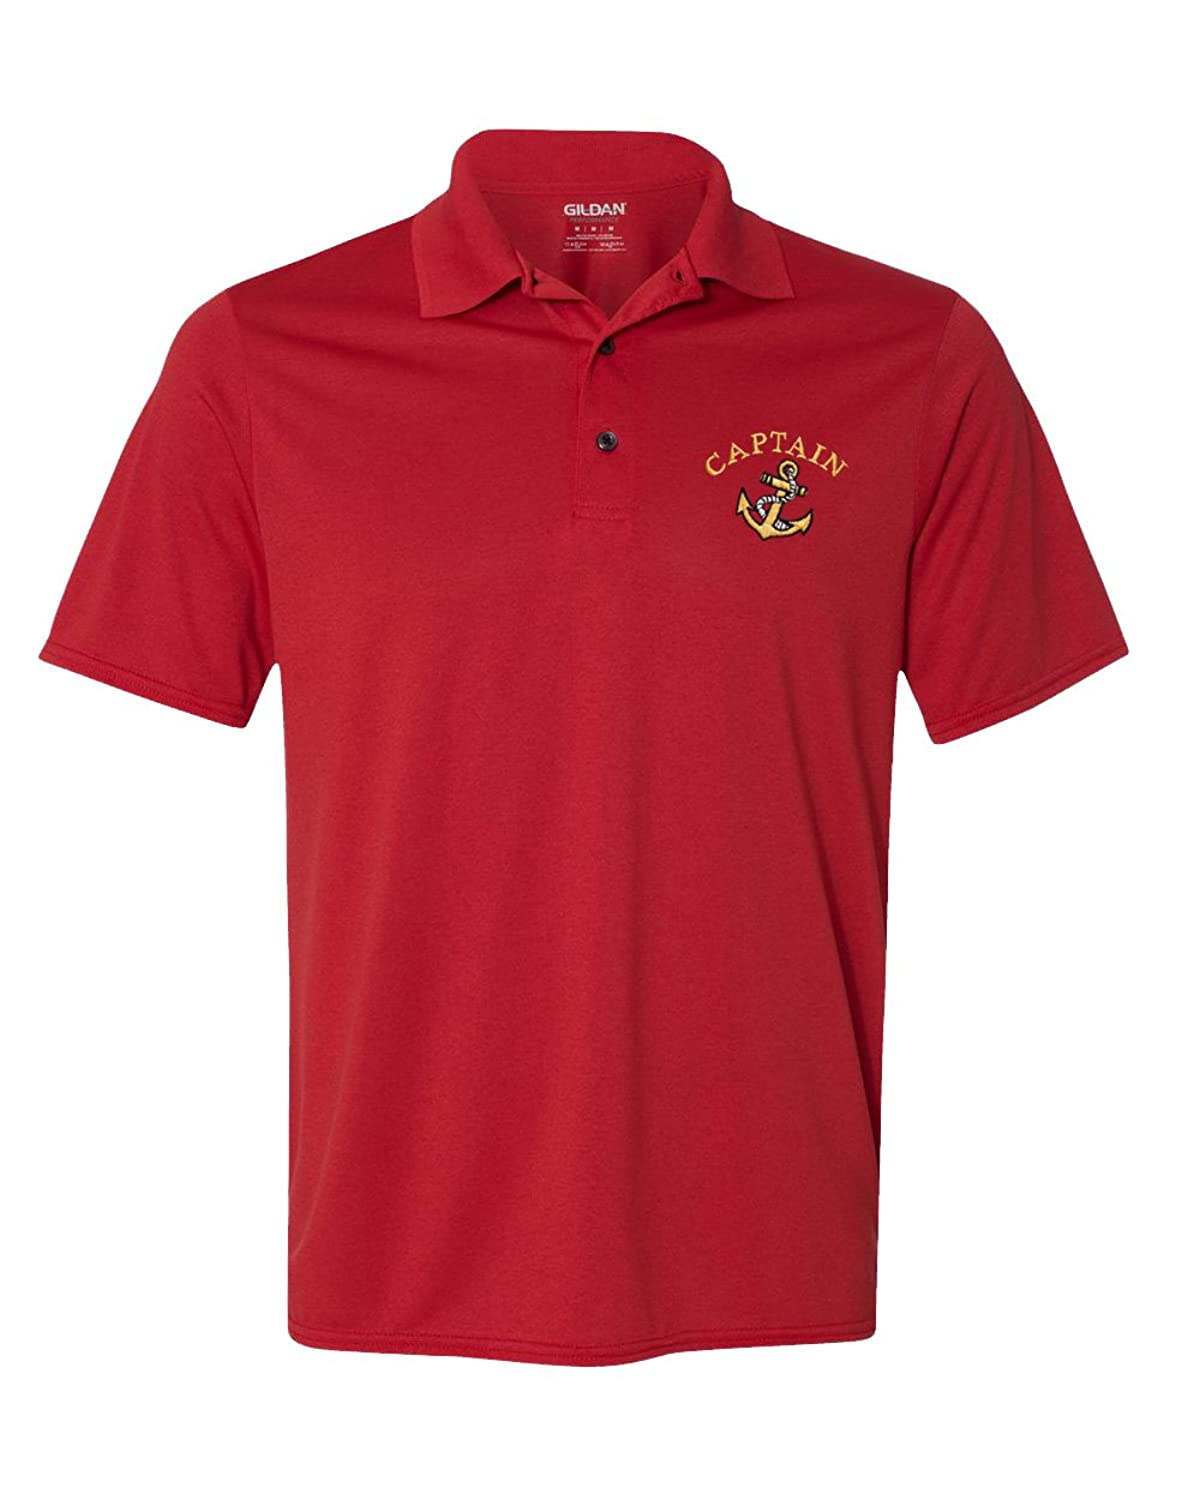 Men's Captain Ships Anchor Embroidered Premium 100% Cotton Shirt